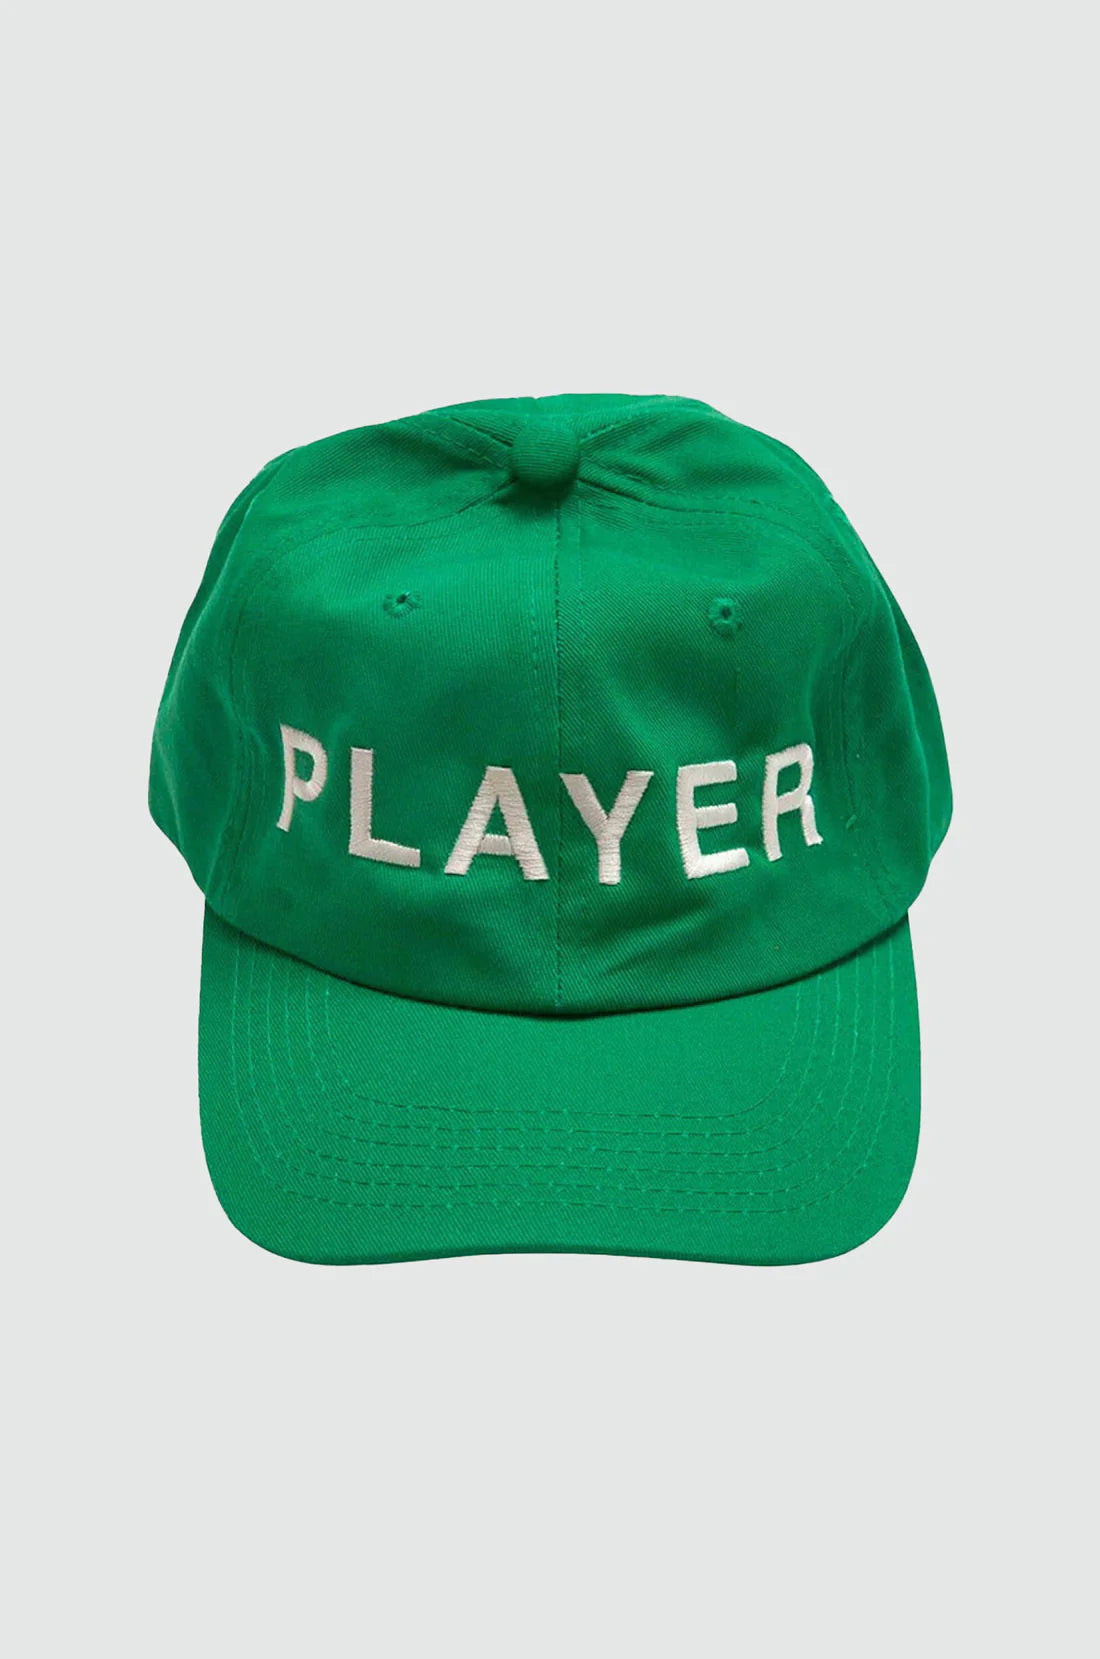 "Player" Baseball Cap